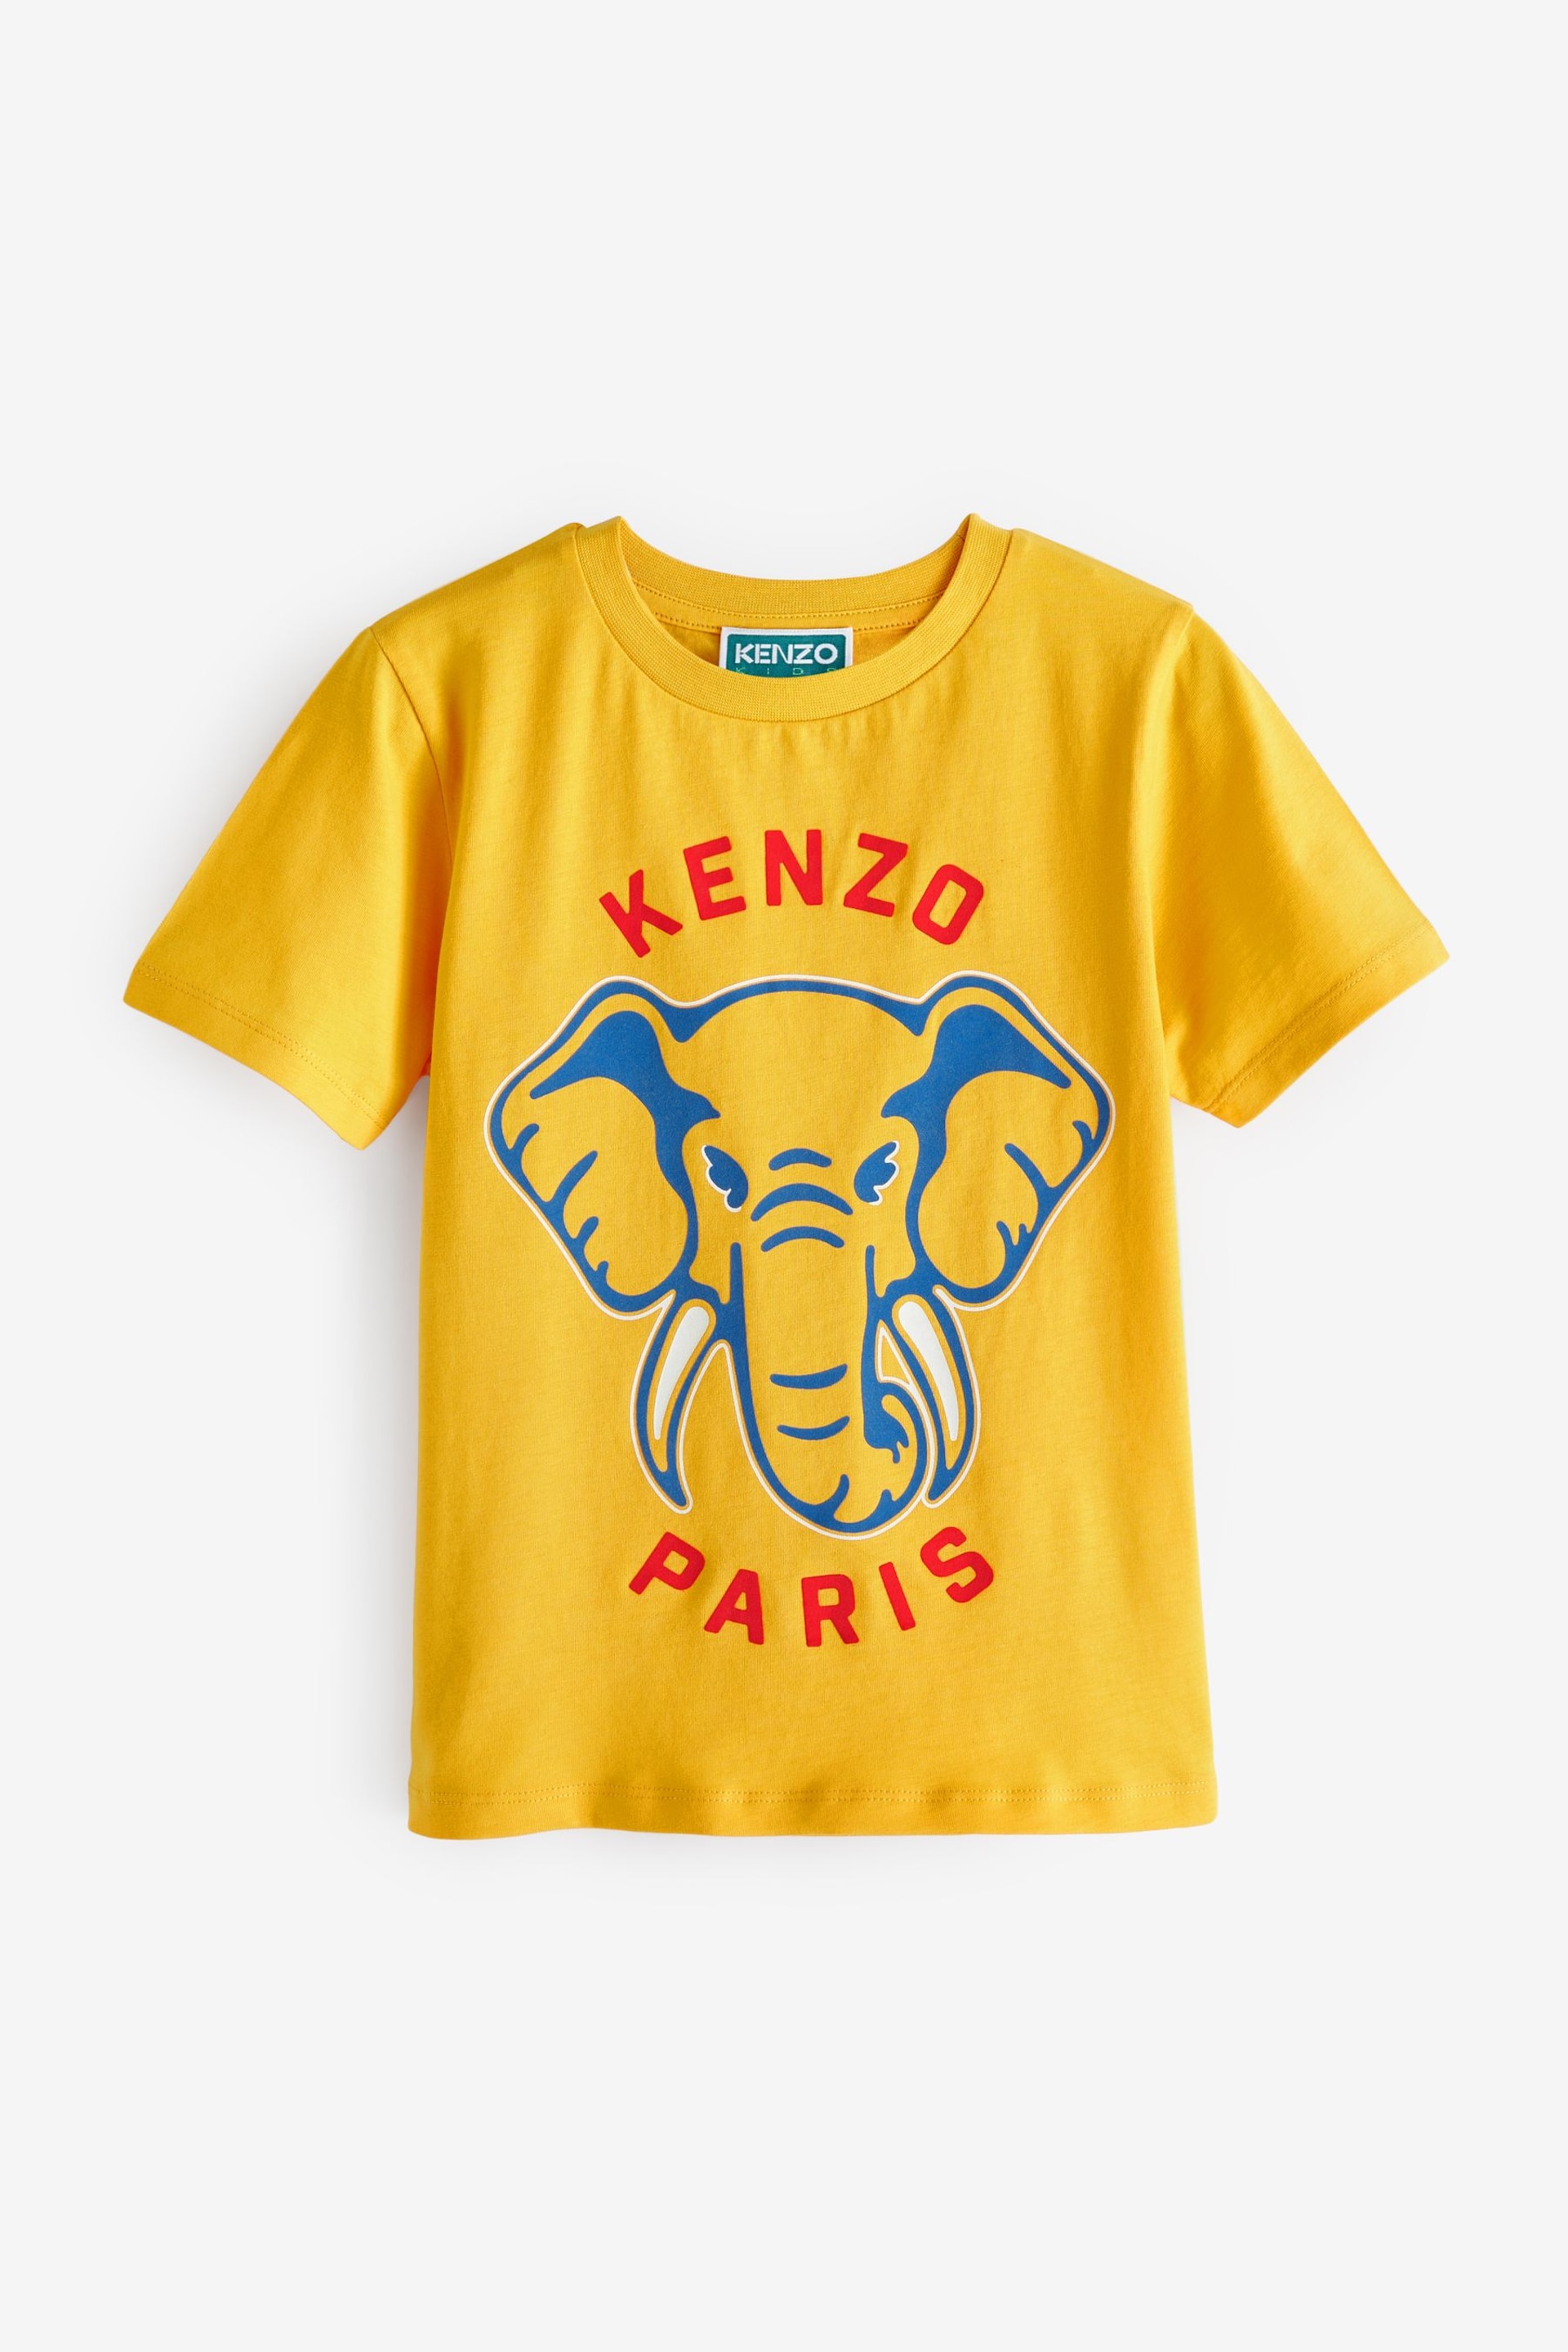 KENZO KIDS Yellow Elephant Logo T-Shirt - Image 3 of 4